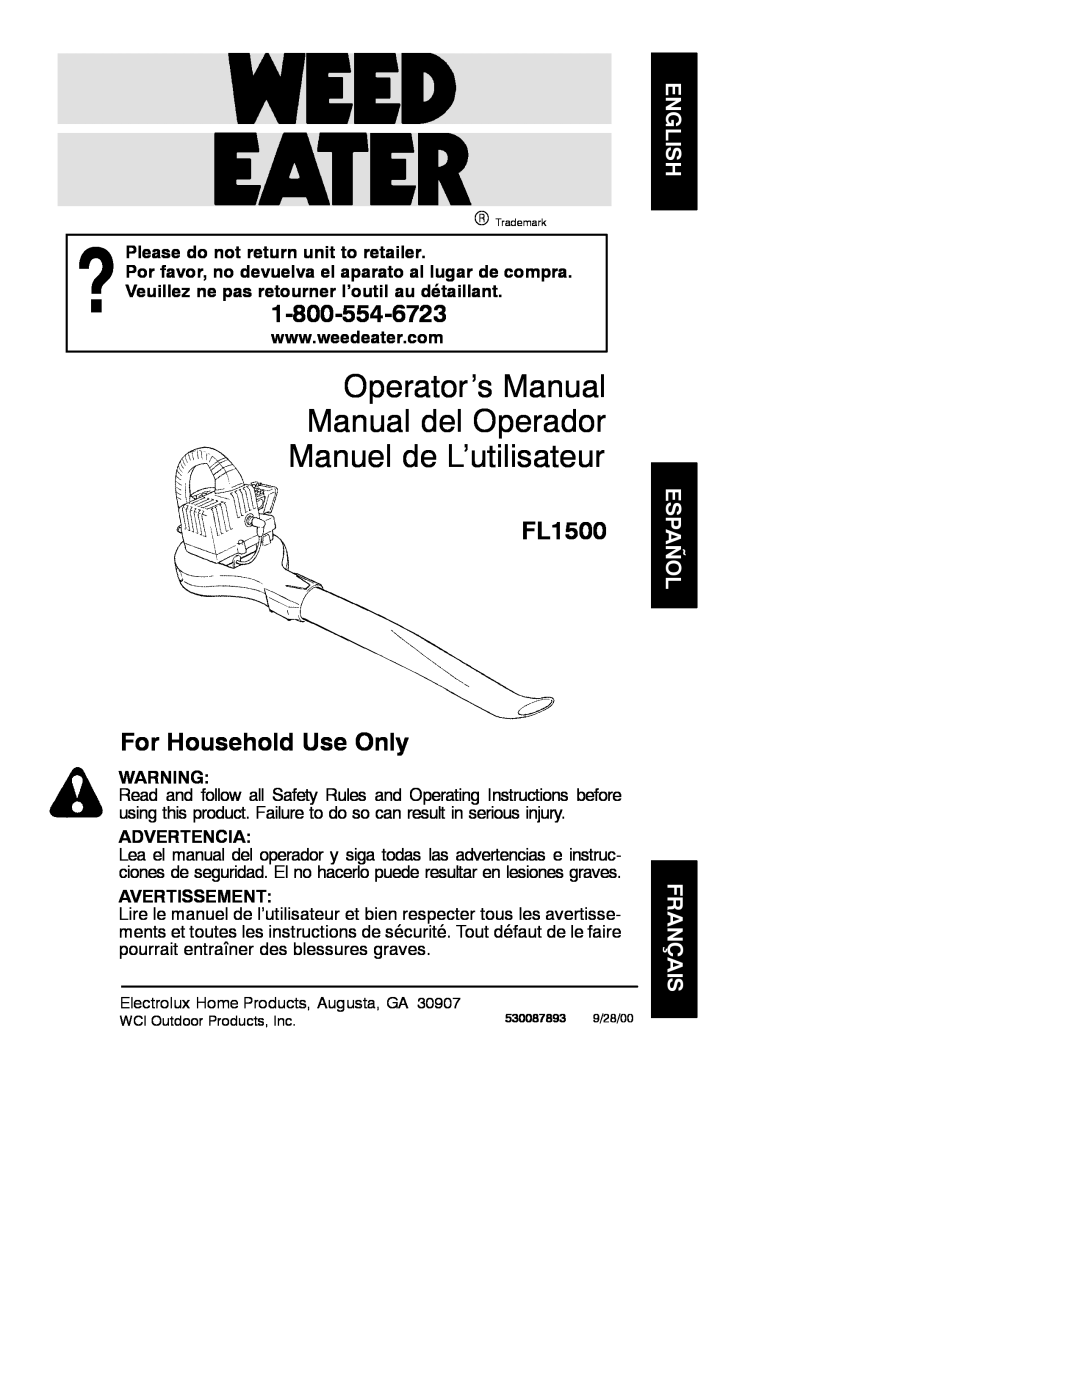 Weed Eater 530087893 manual Operator’s Manual Manual del Operador, Manuel de L’utilisateur, 1-800-554-6723, Advertencia 